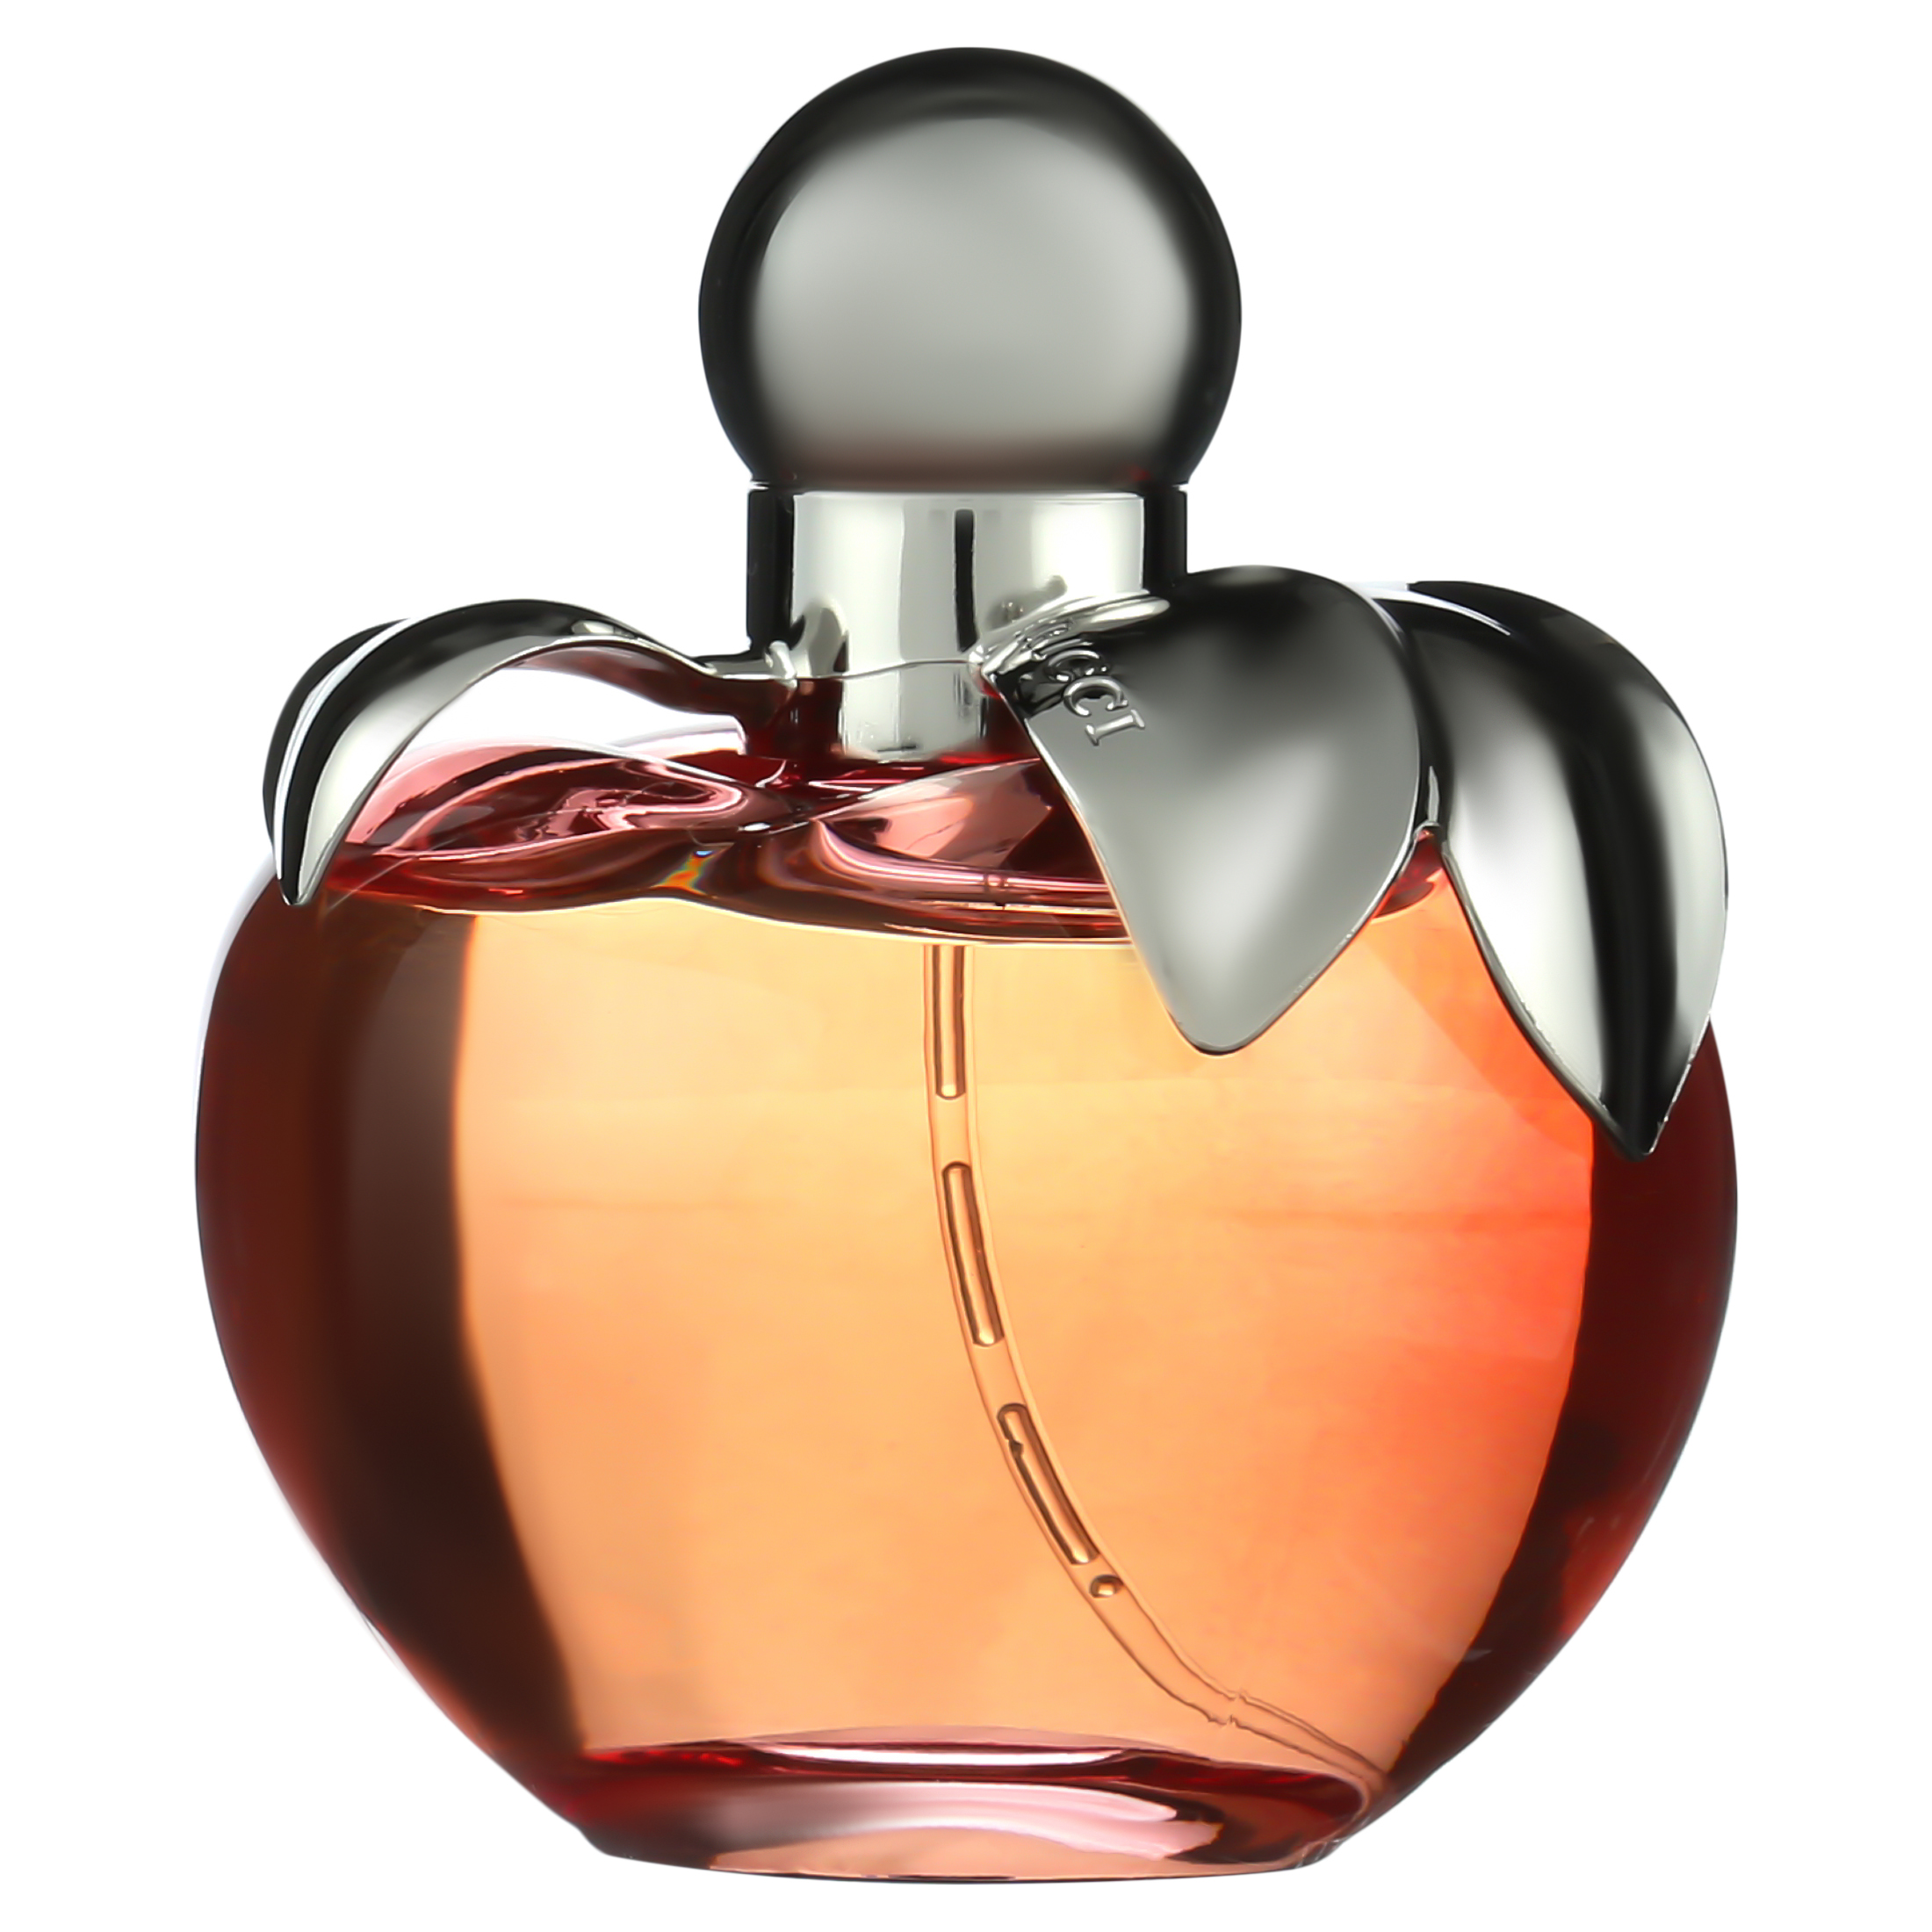 Nina Ricci Nina Eau de Toilette, Perfume for Women, 2.7 Oz - image 2 of 5